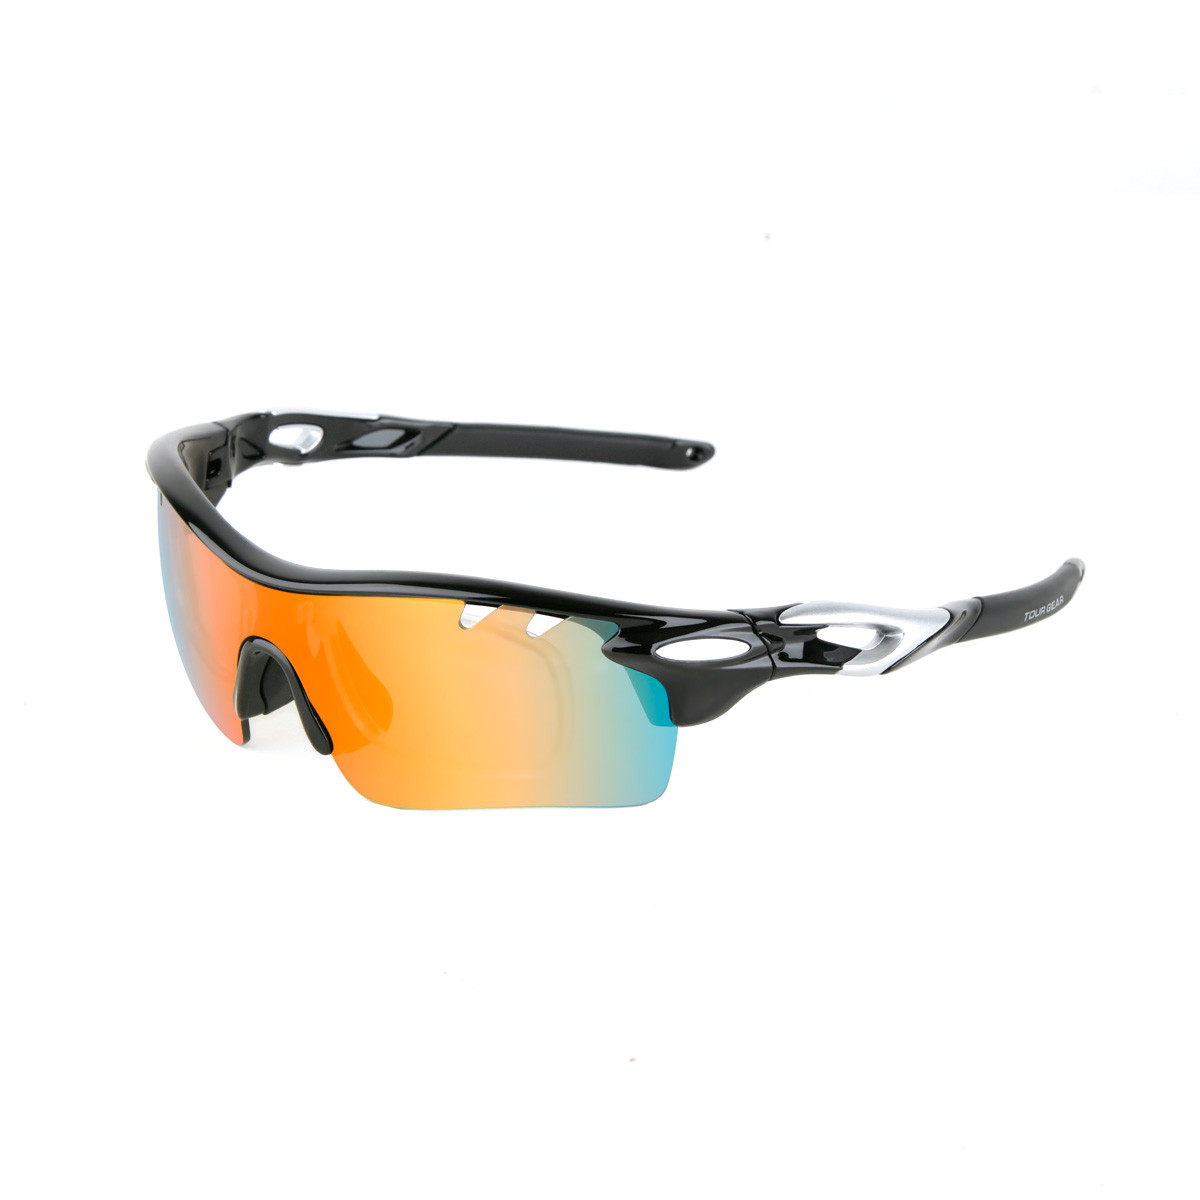 NEW Tour Gear Gloss Black Interchangeable Golf/Sports Sunglasses w/5 Lenses - image 1 of 5